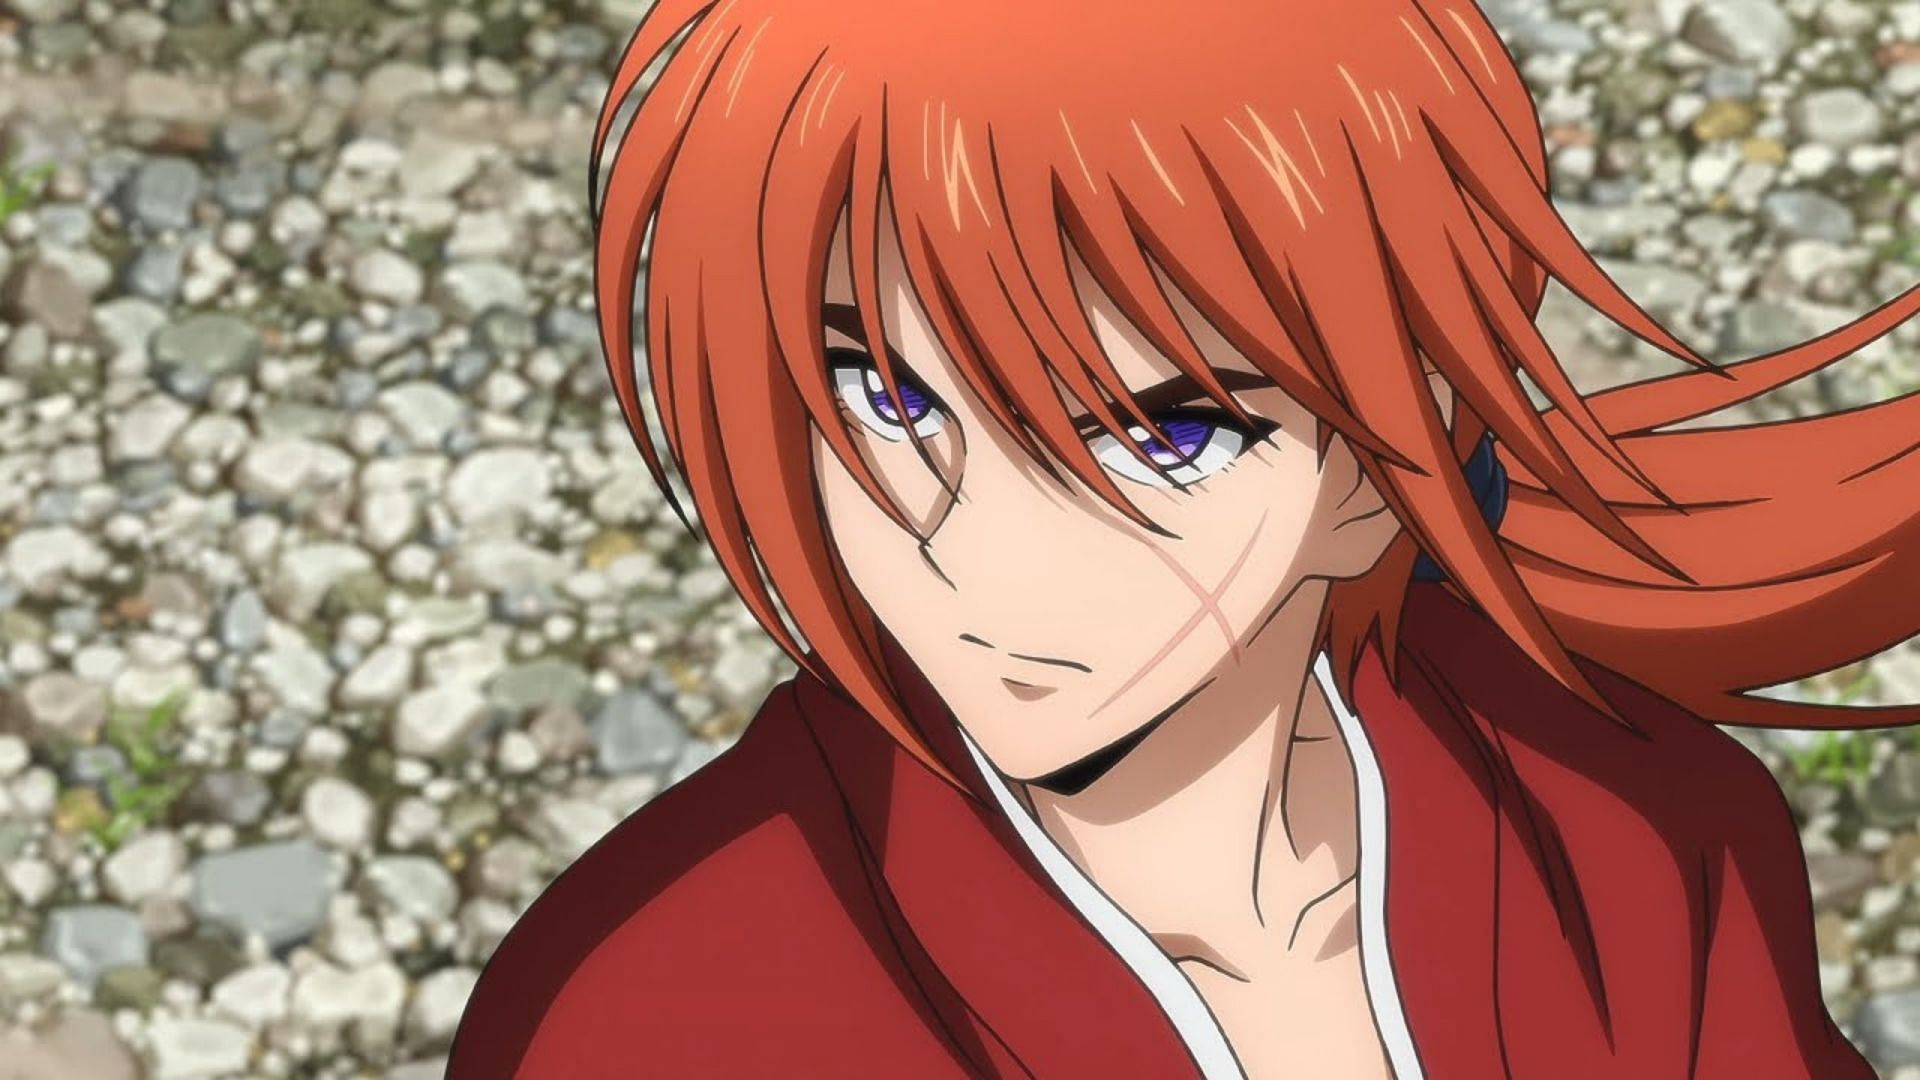 The Return of Rurouni Kenshin – All About Anime and Manga